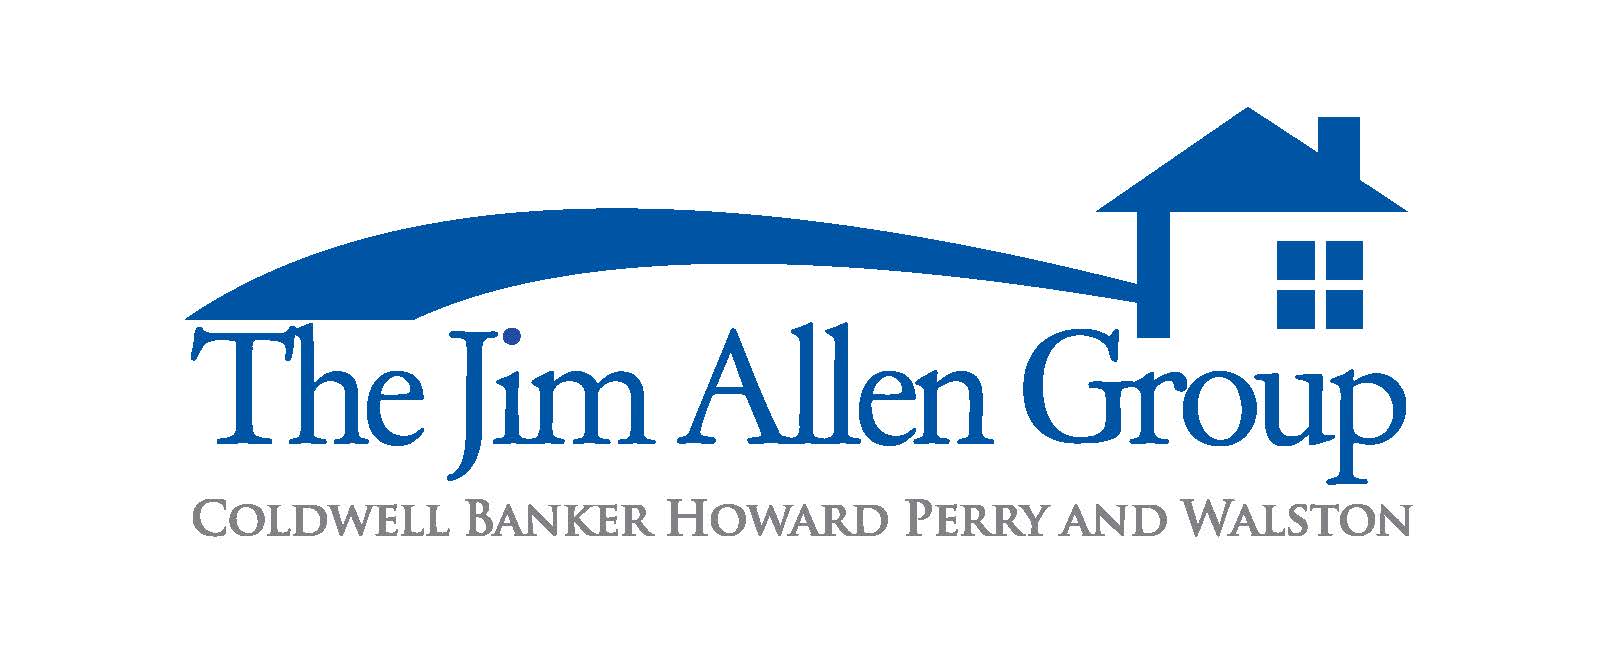 The Jim Allen Group